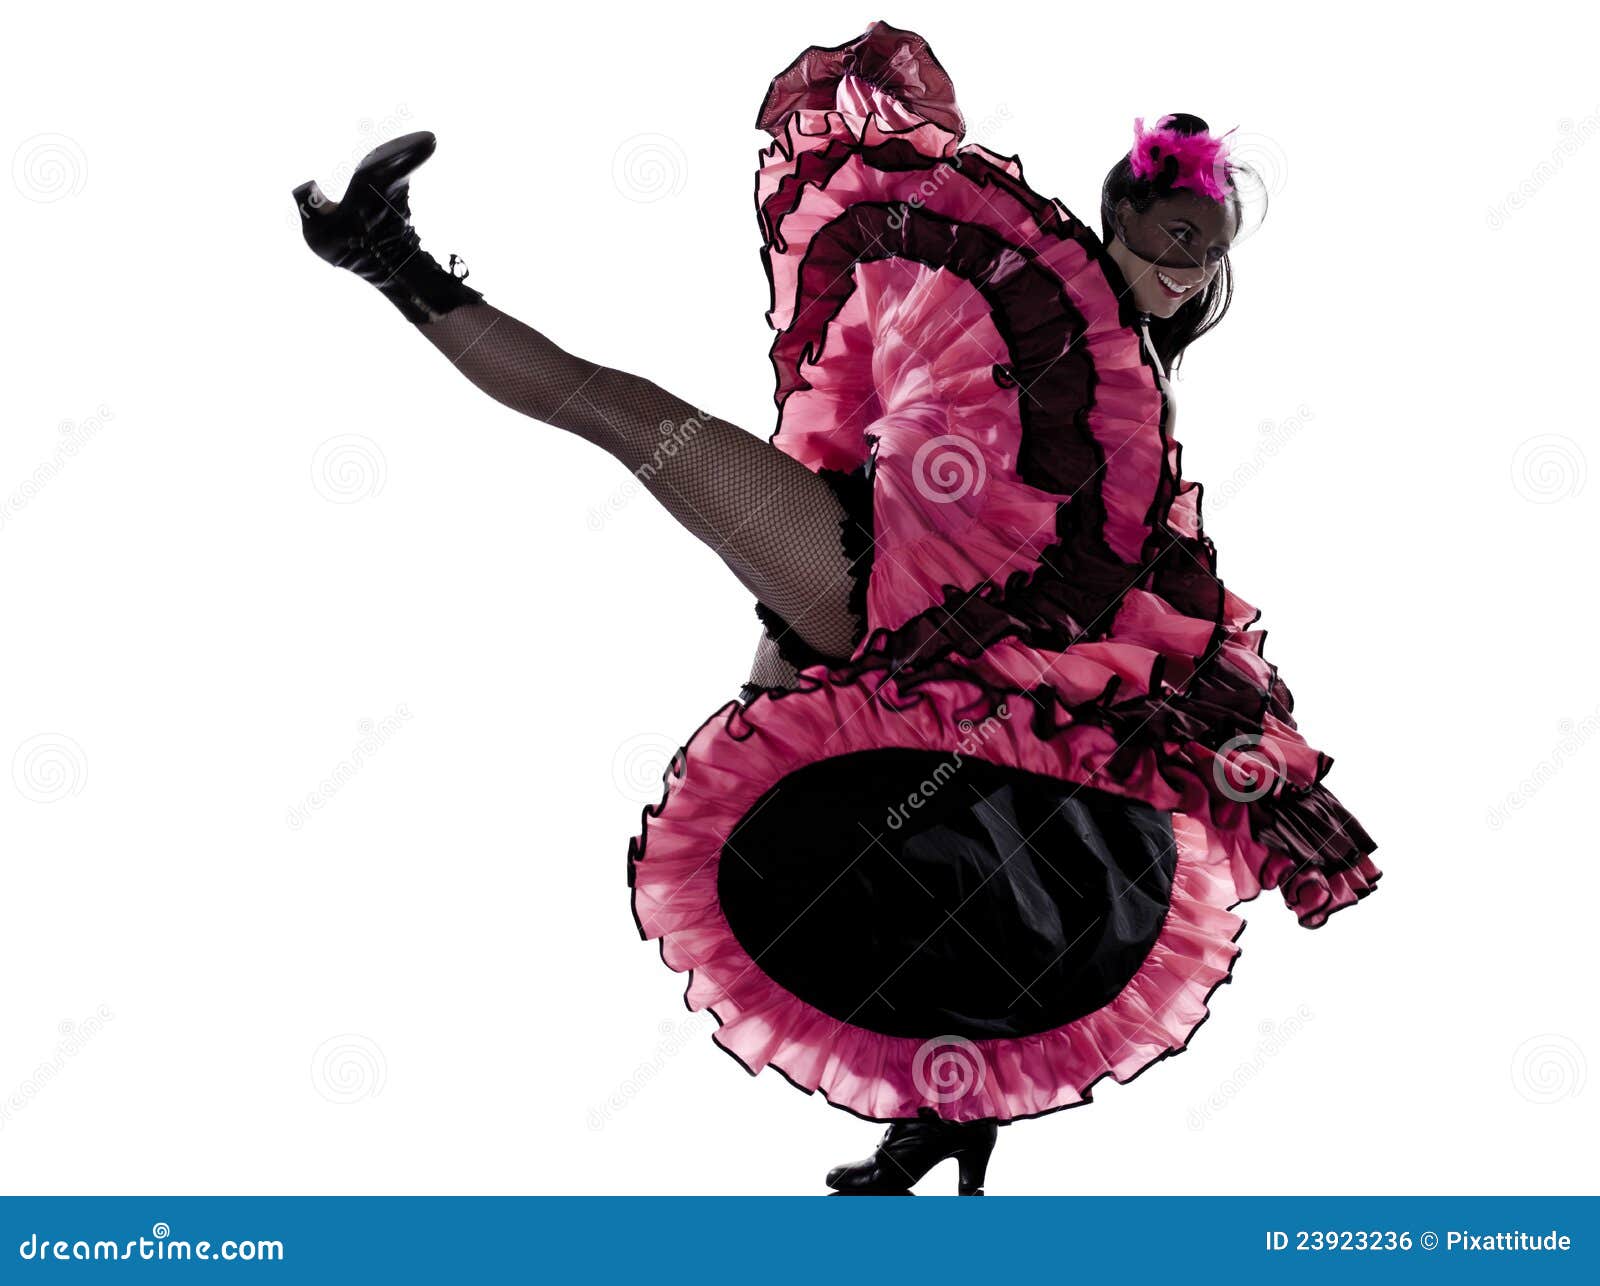 Cancan dancer stock photo. Image of elegance, costume - 54619770